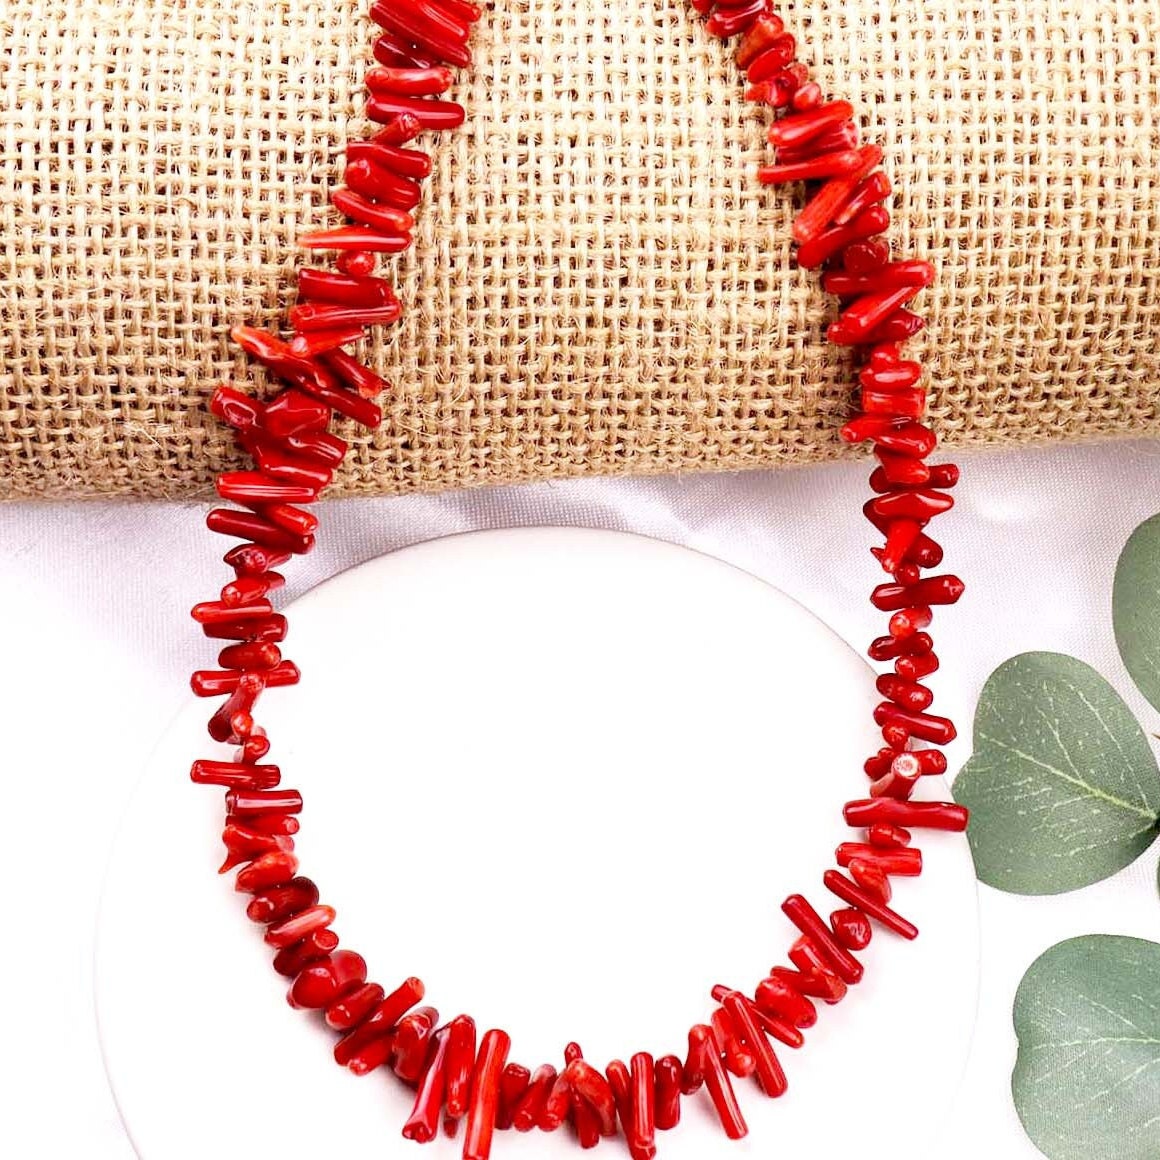 Red Coral Beads, 2.5mm 3mm 4mm 6mm 8mm 10mm 12mm Round Coral Beads Strand,  Natural Loose Gemstone Beads, Semi Precious Stone Beads, CRL20X0 